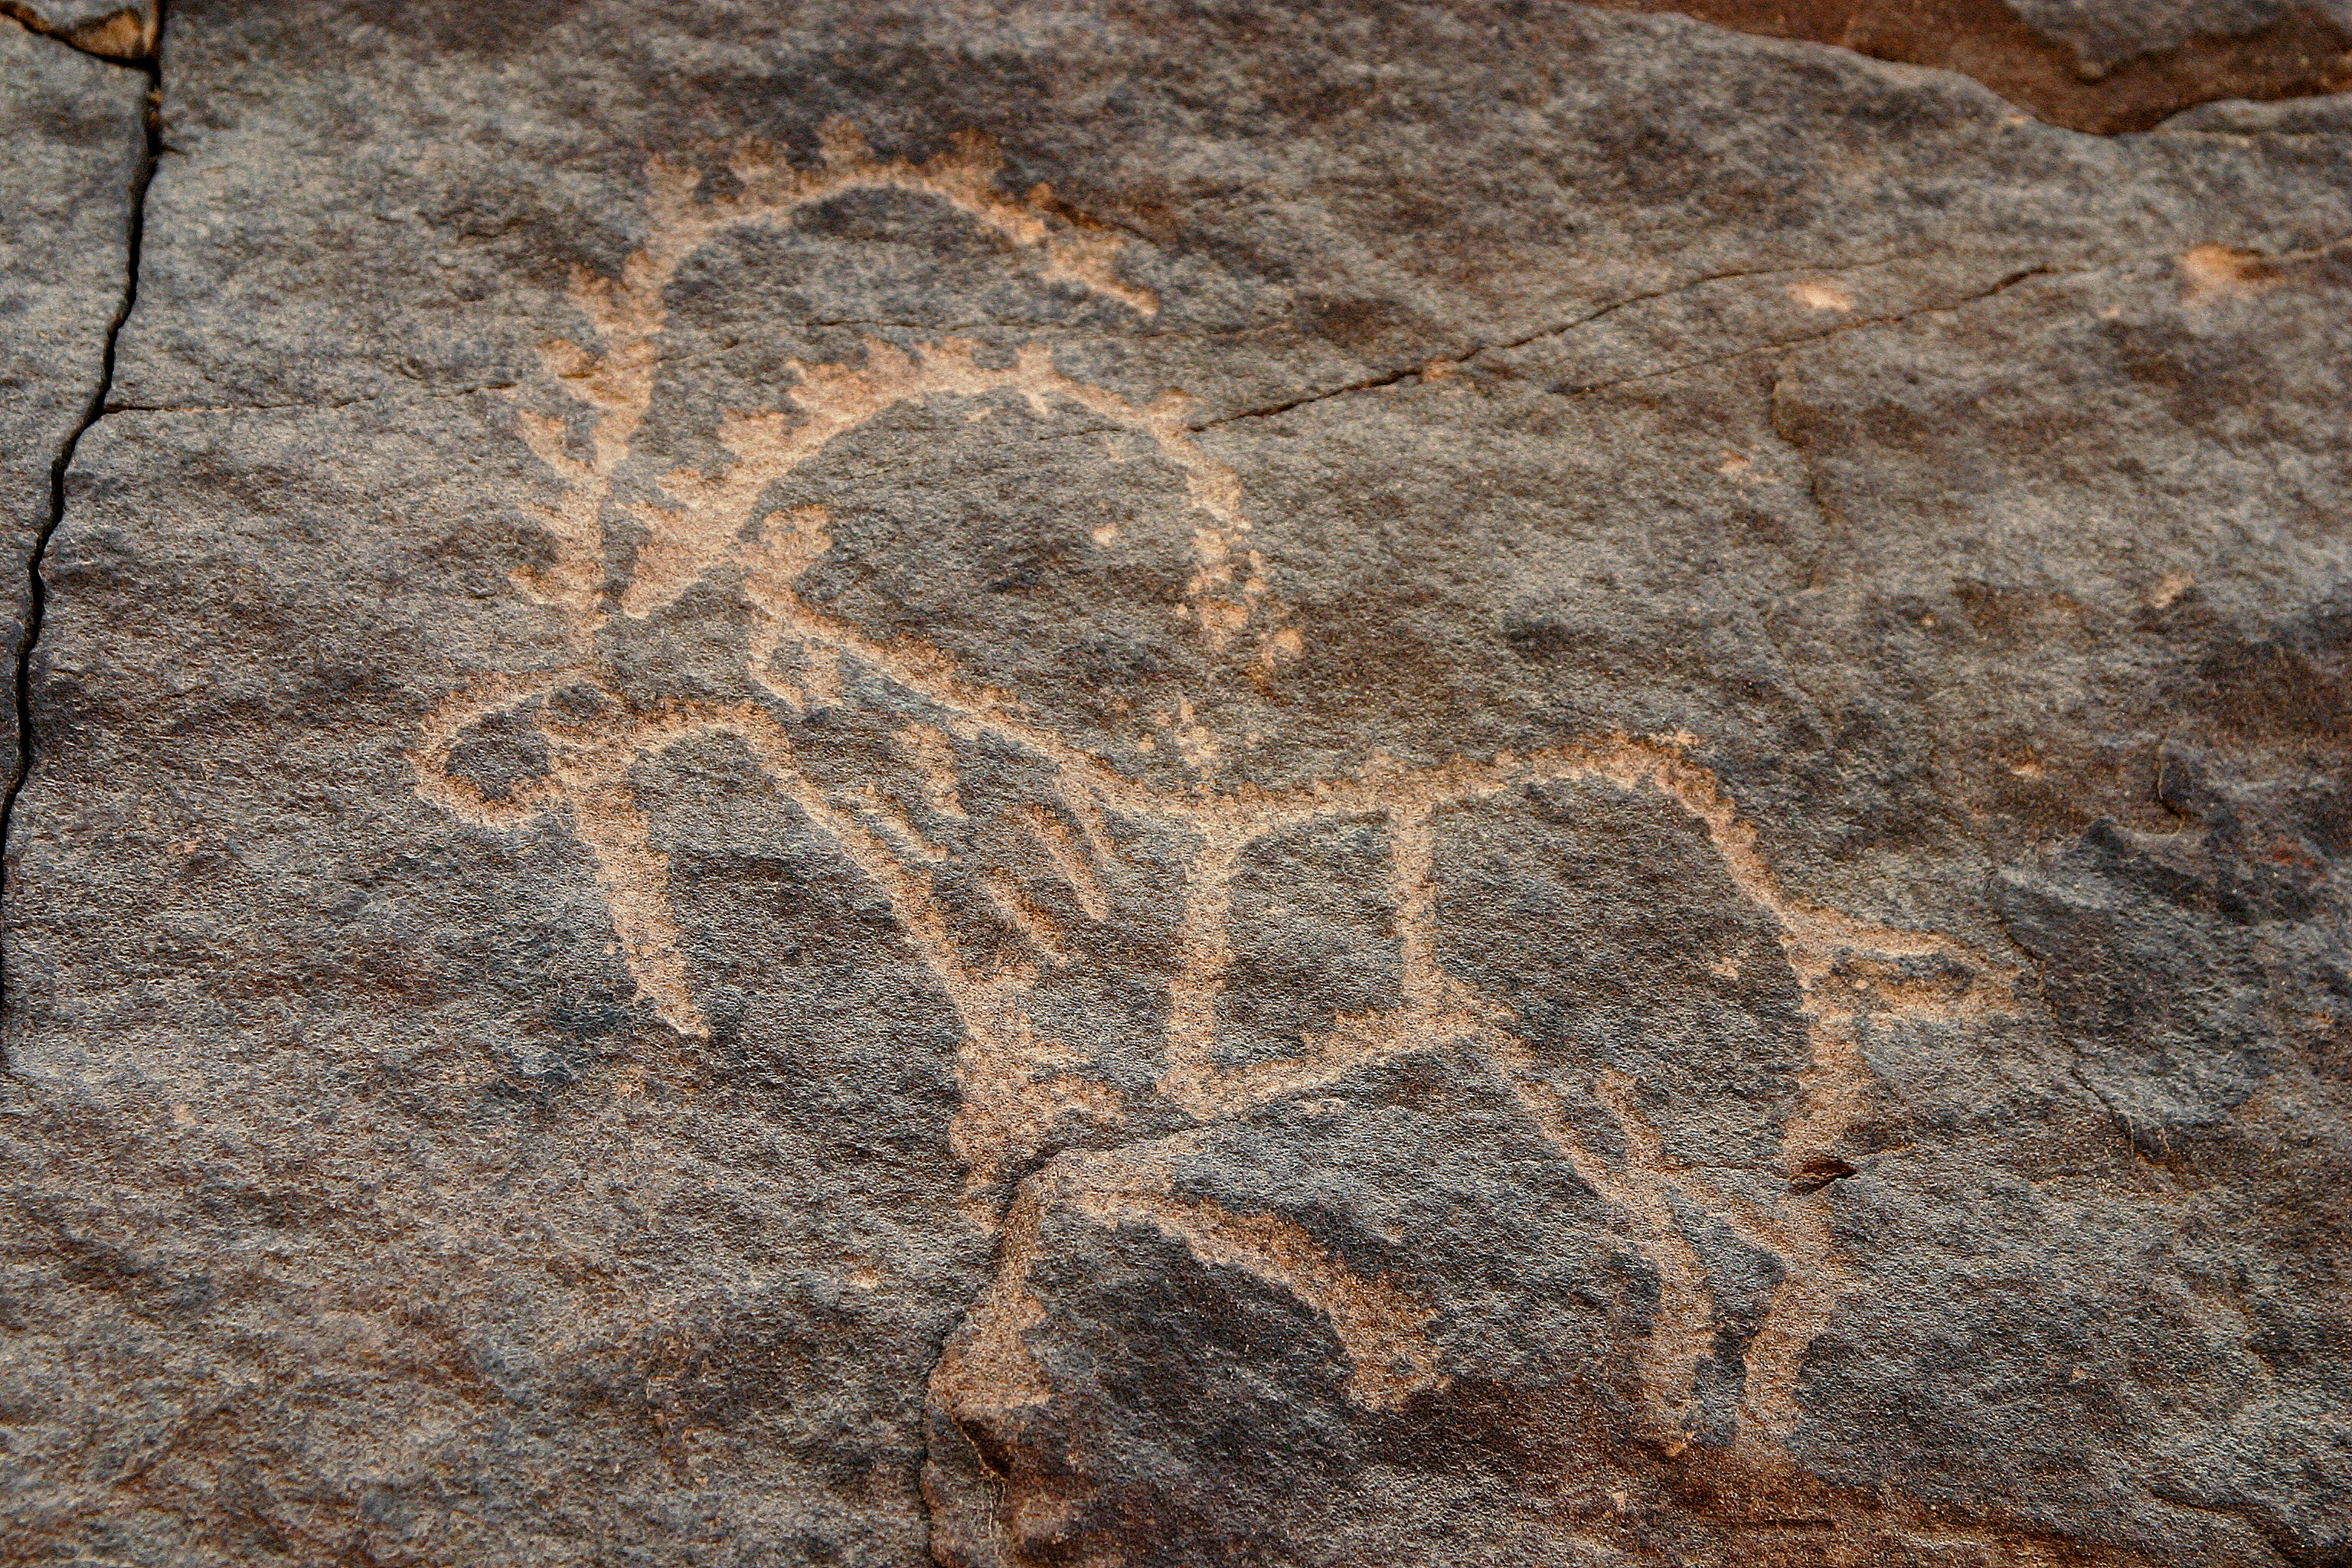 Petroglyph at Bir Hima in Saudi Arabia